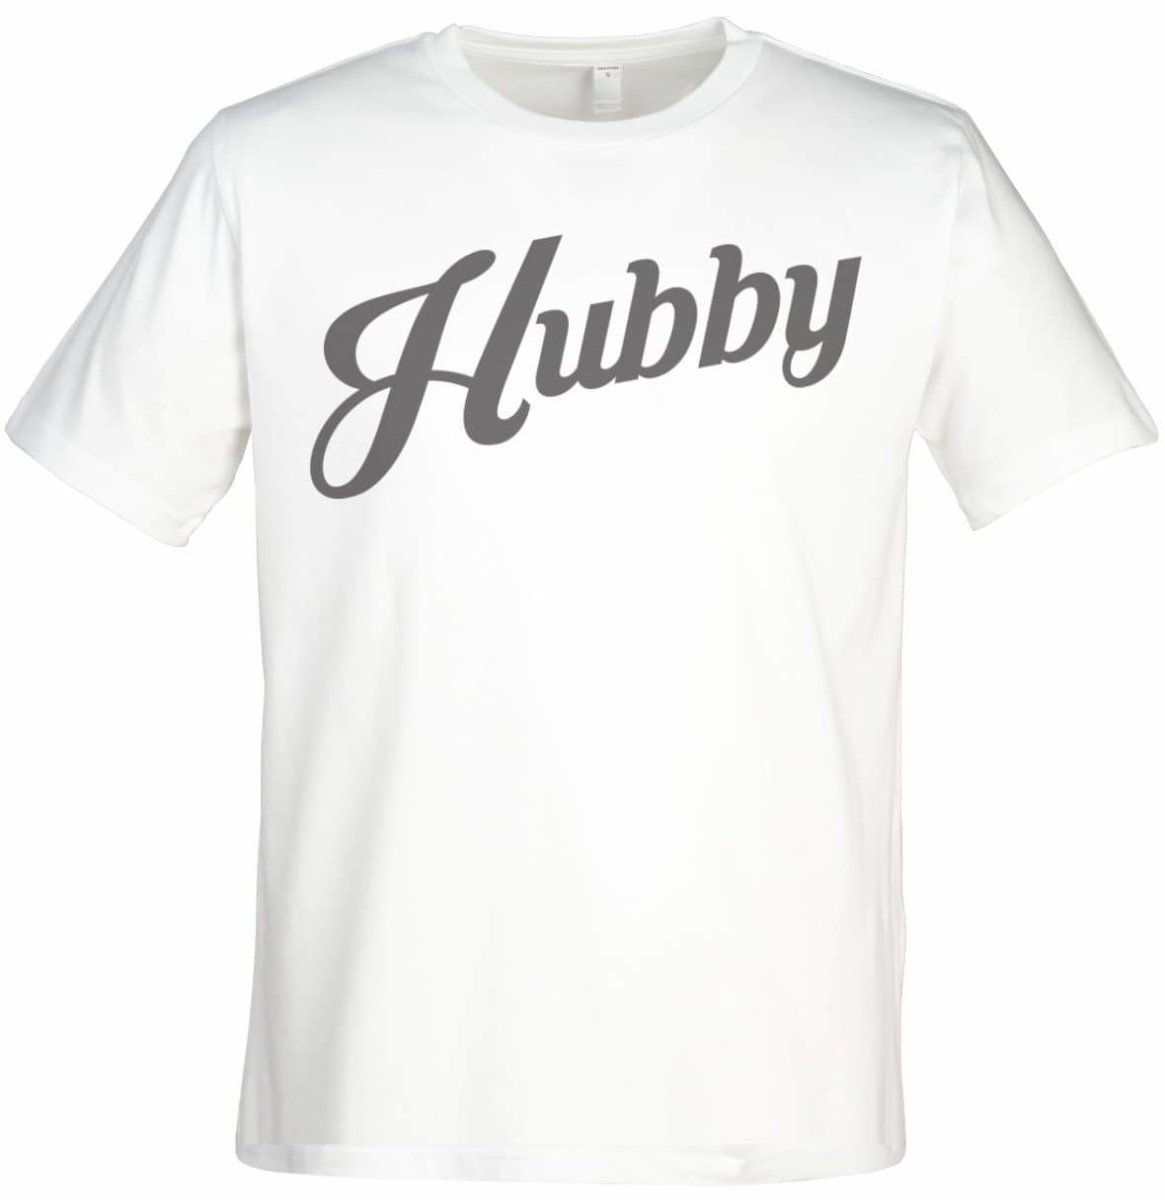 Hubby - Mens T-Shirt